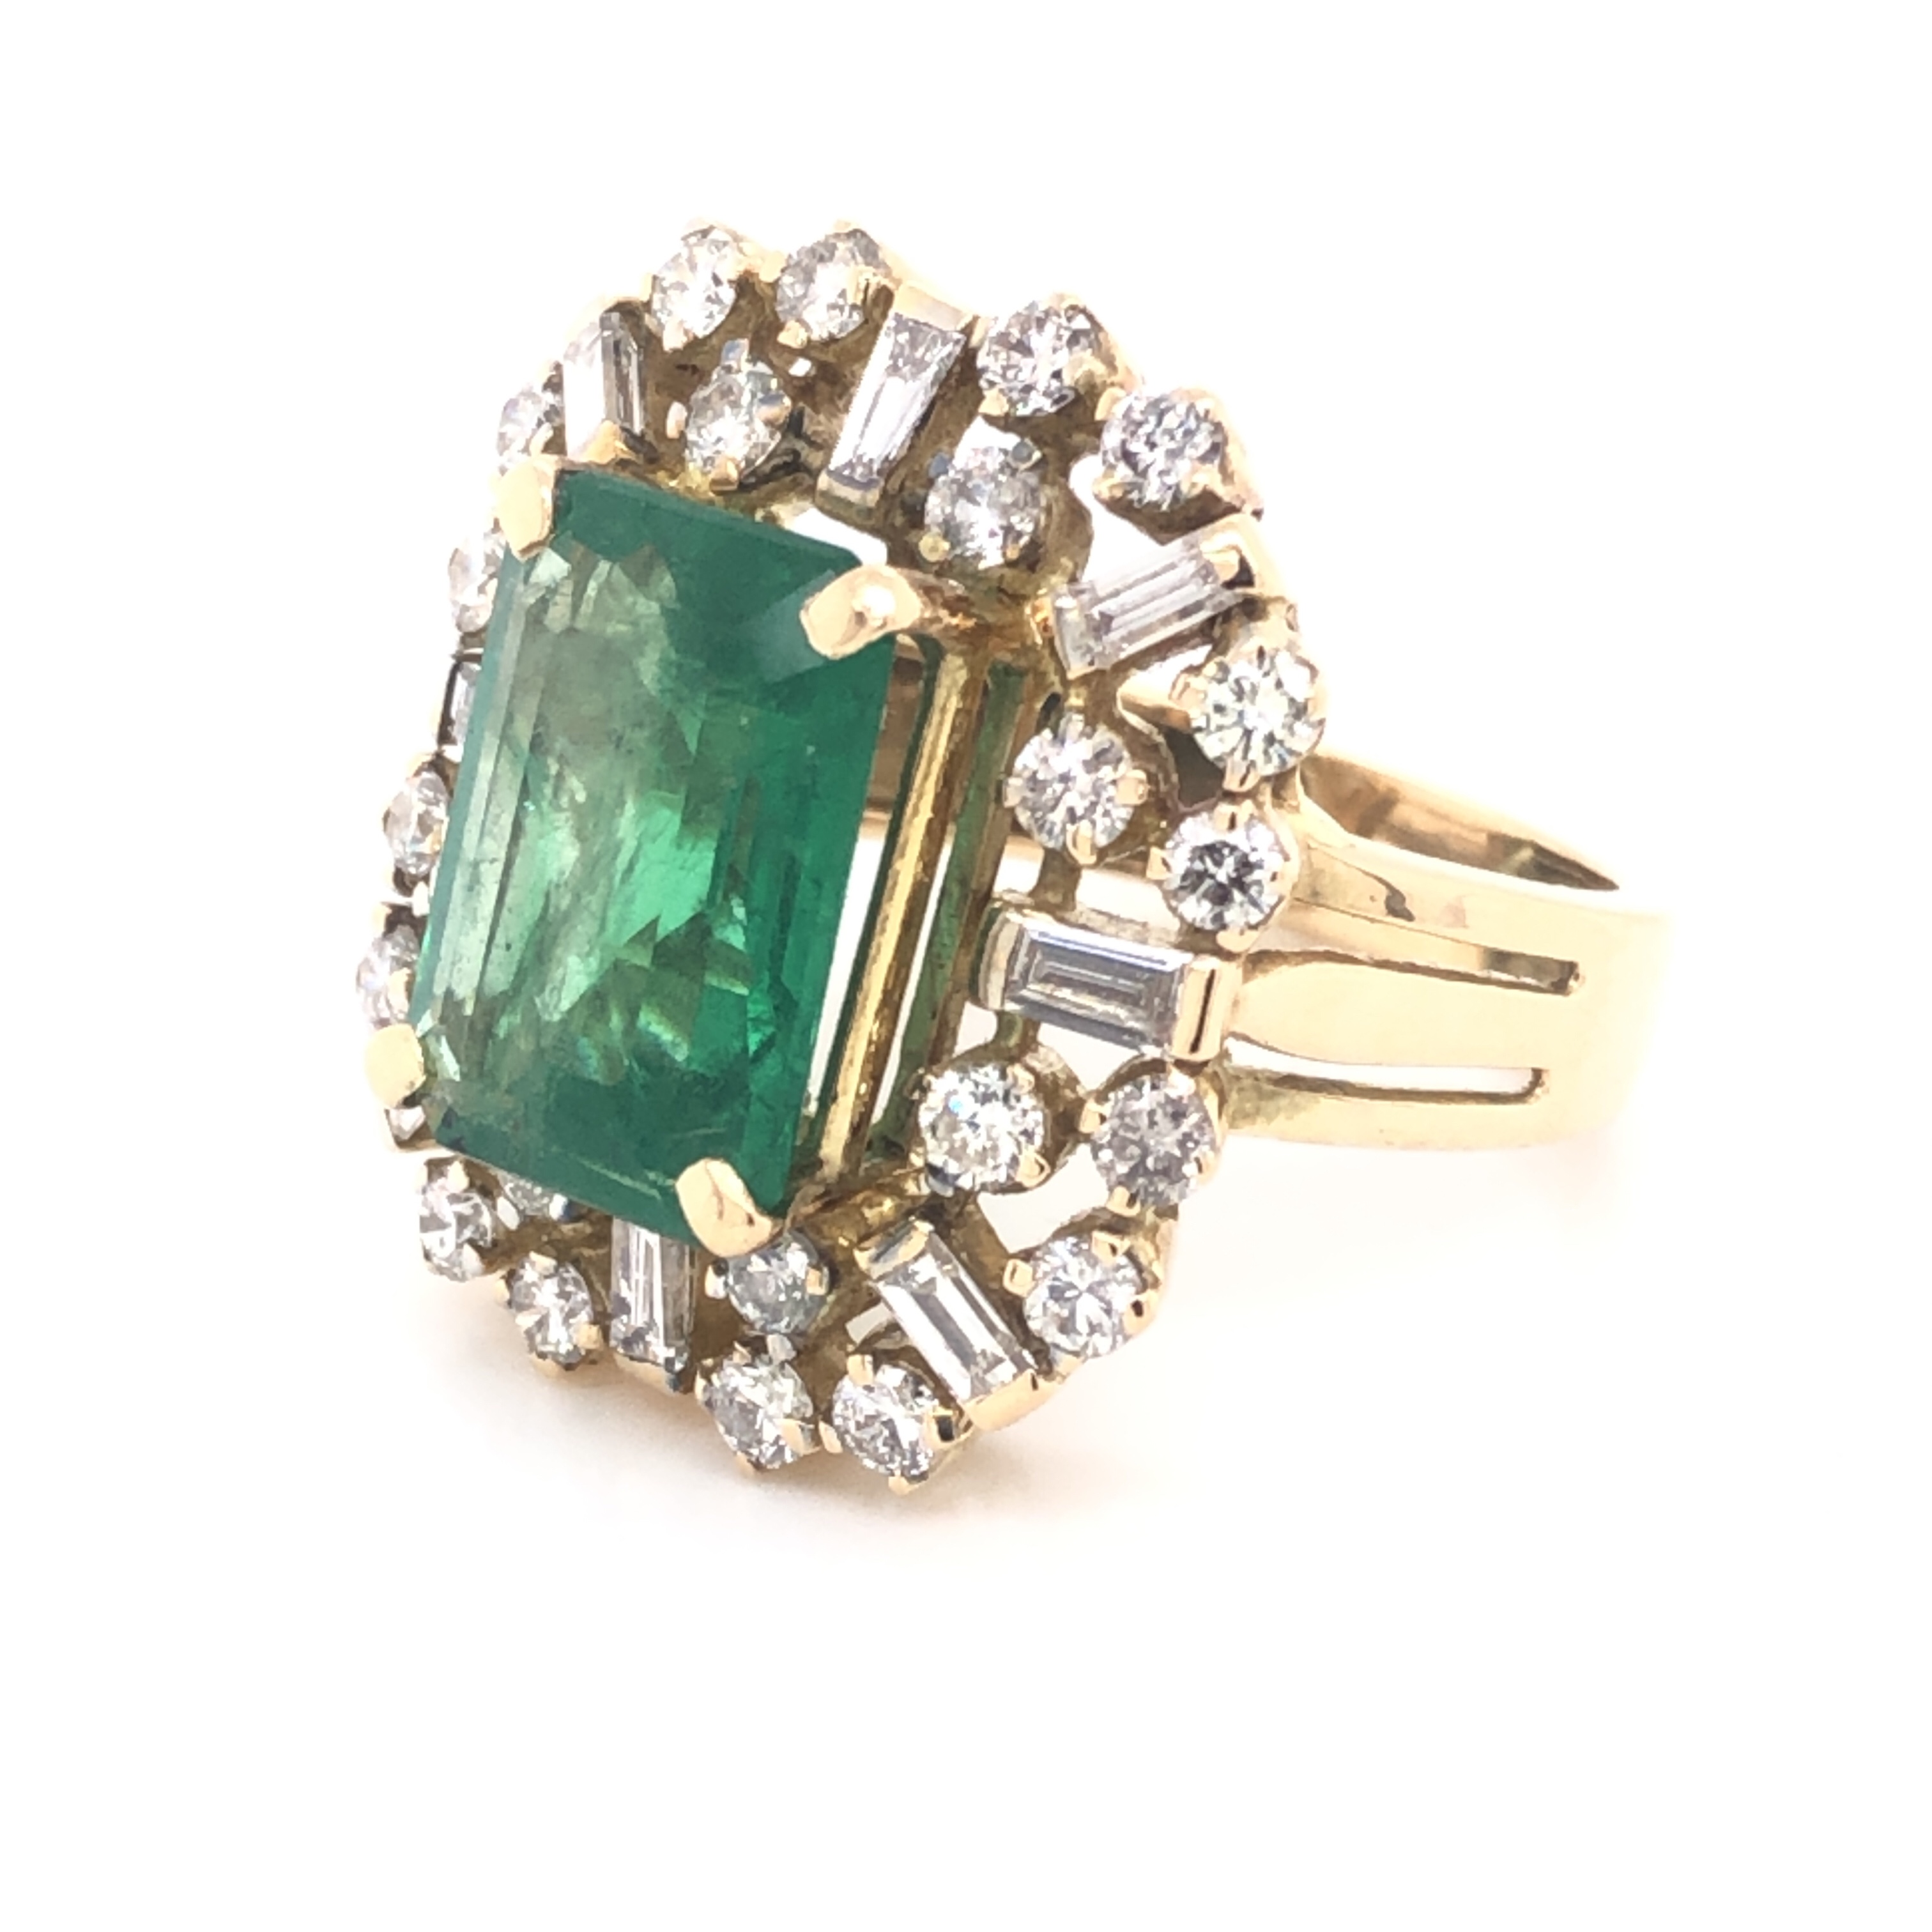 Emerald & Diamond Ring - Image 2 of 3